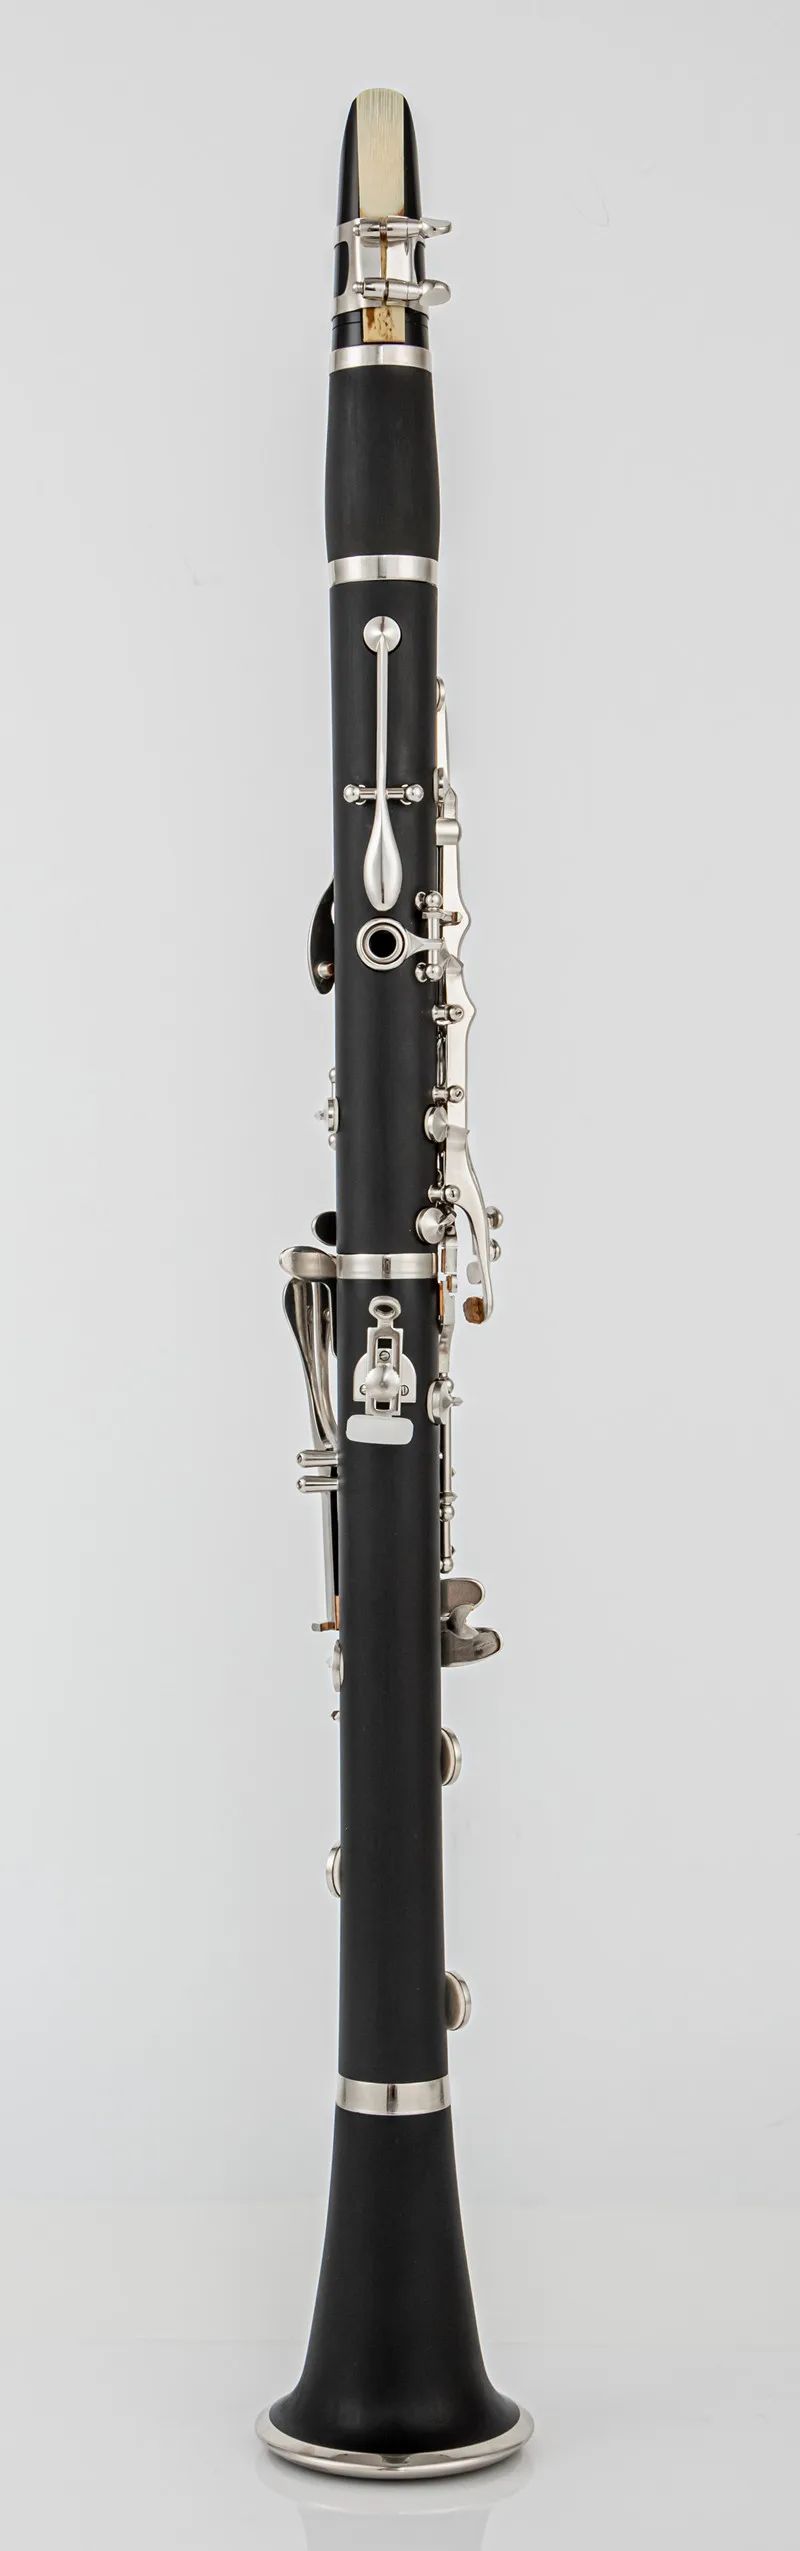 Tillverkad i Japan 650 Clarinet 17 Nyckel Falling Tune B /Bakelite Pipe Body Material Clarinet Woodwind Instrument